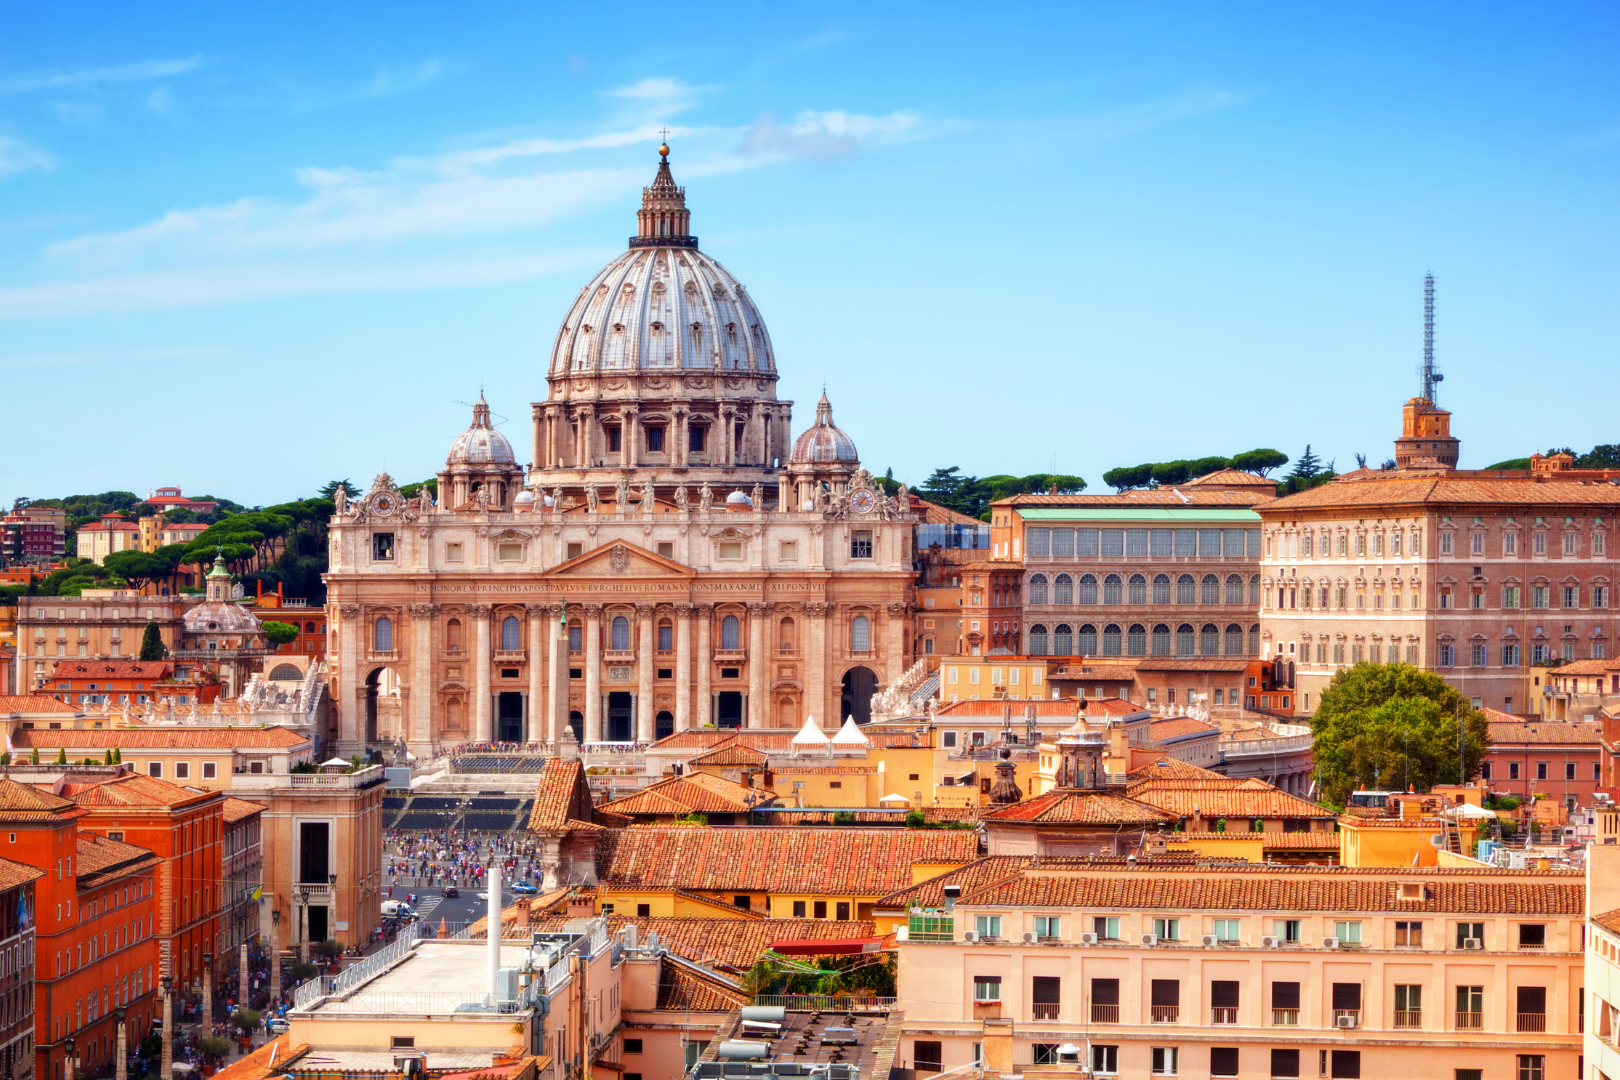 Saint Peters Basilica and Vatican Museums